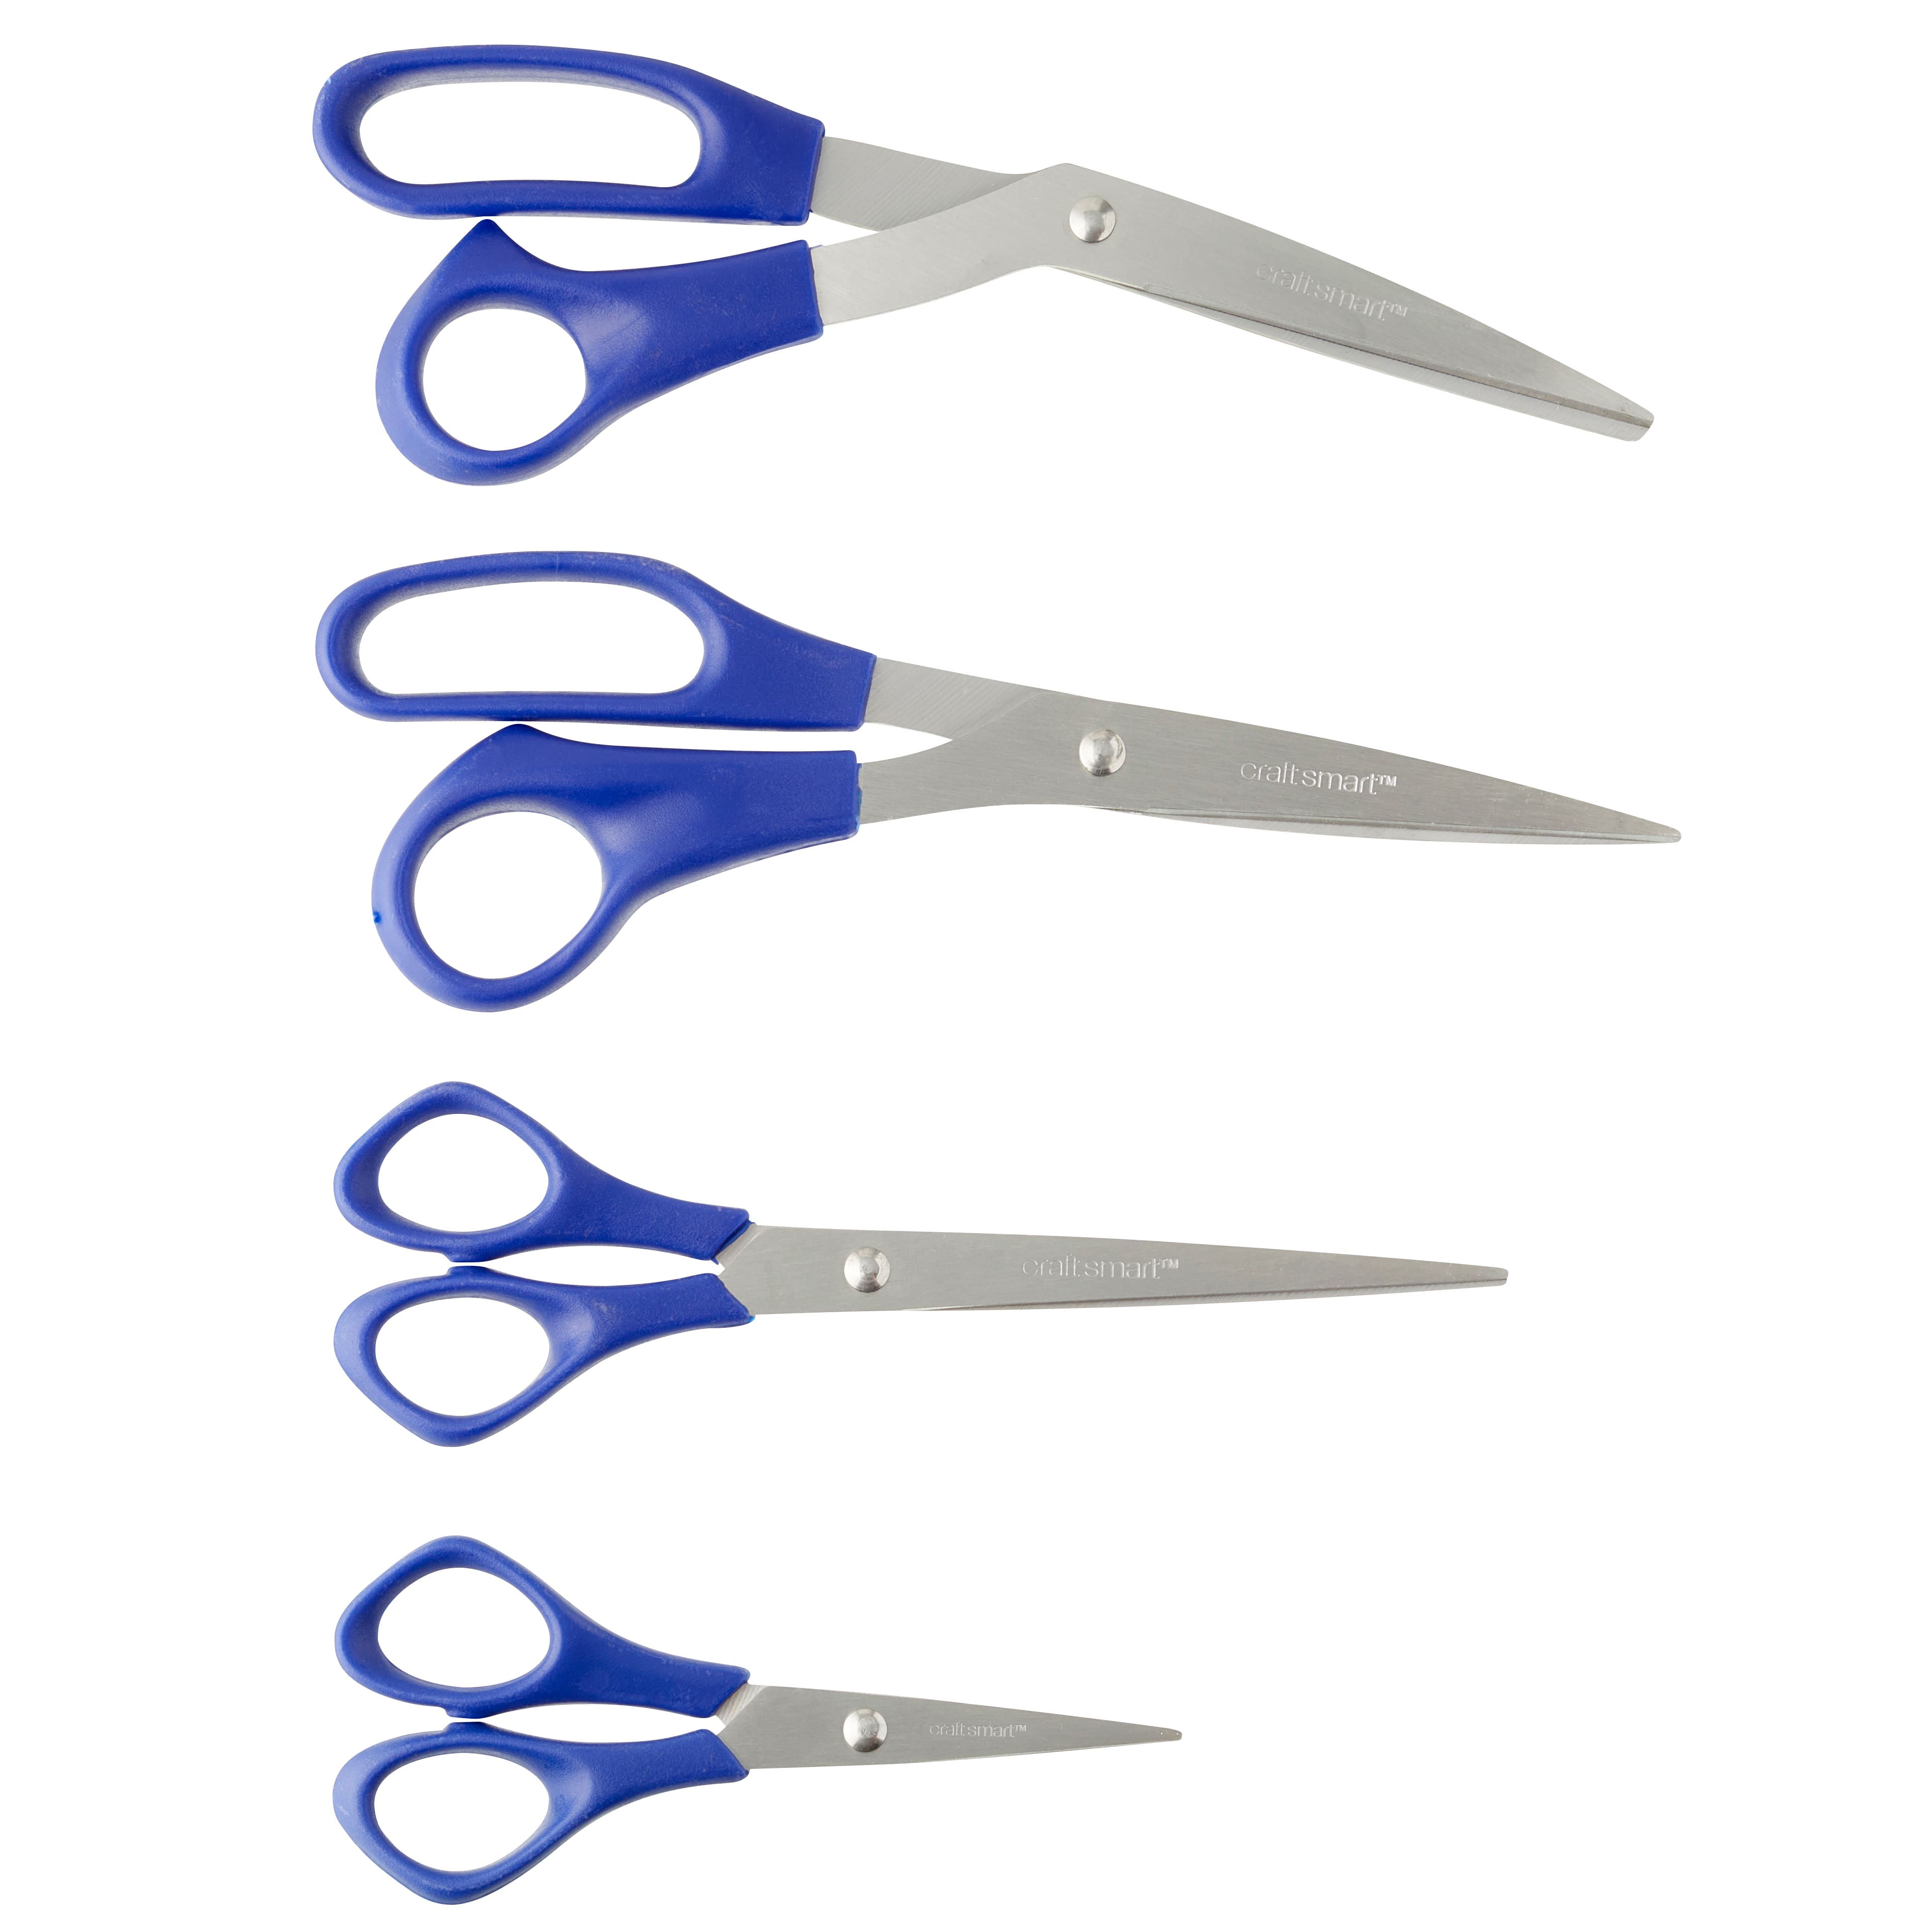 24 Packs: 4 ct. (96 total) Multi-Purpose Scissors Value Pack by Craft  Smart™